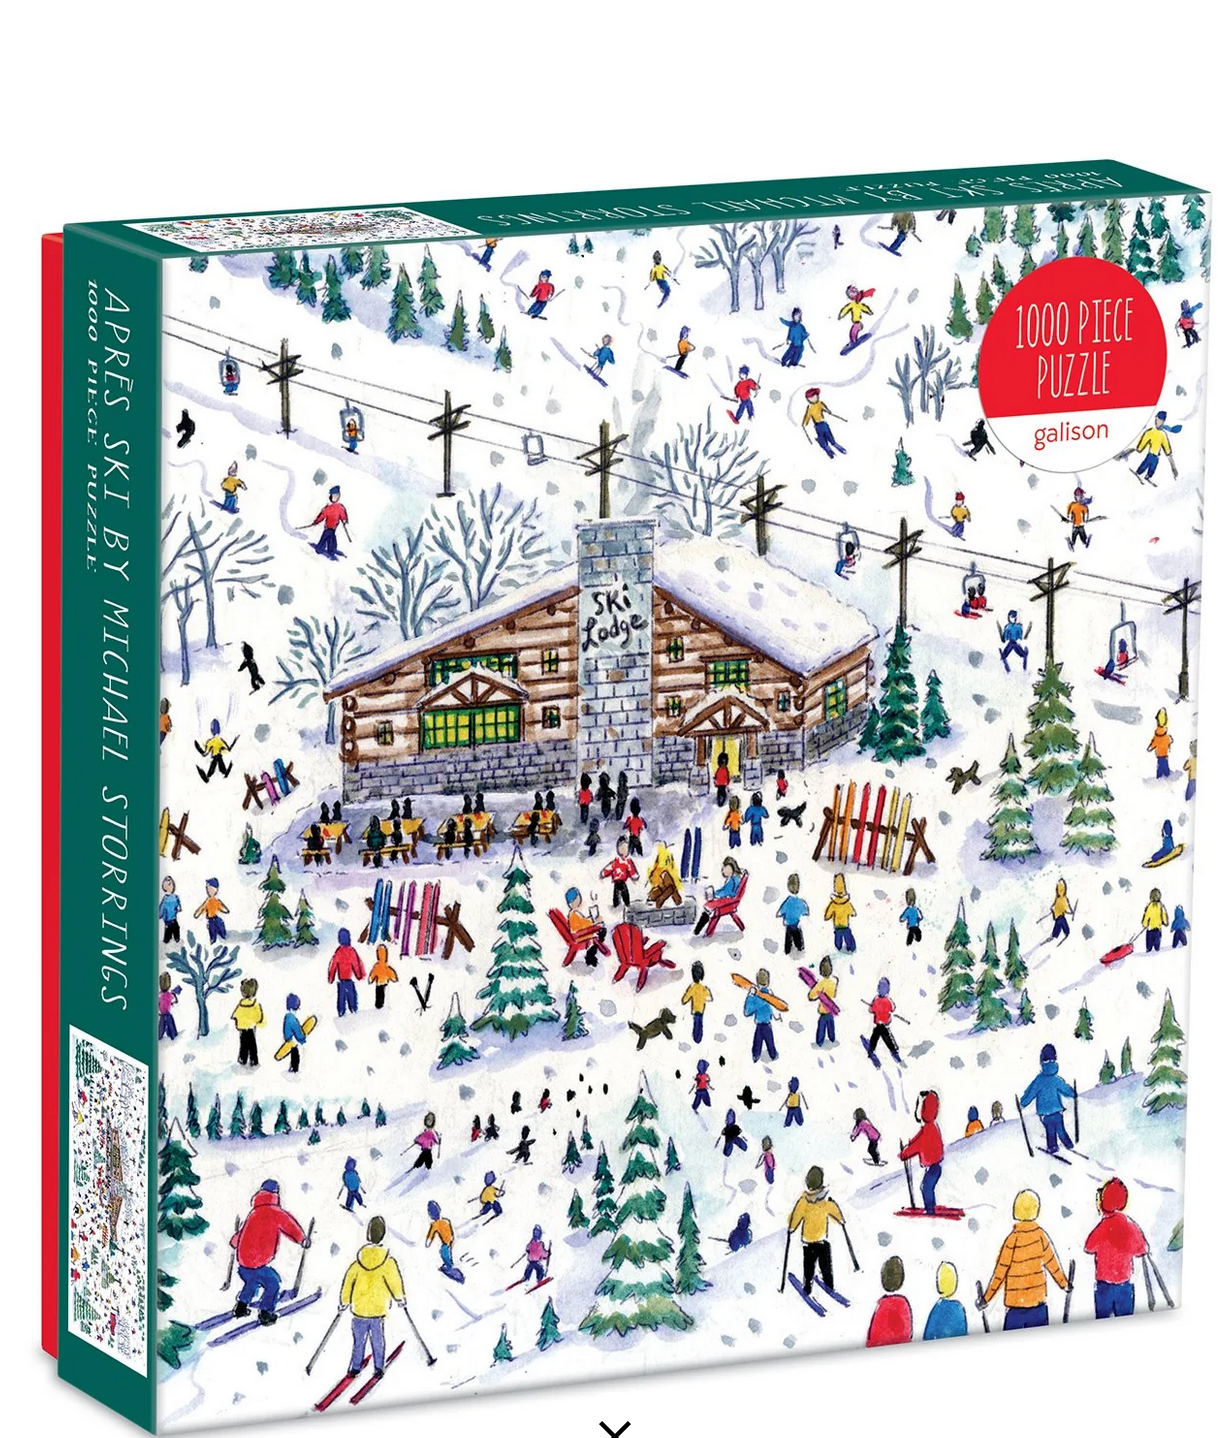 Apres Ski by Michael Storrings 1000 Piece Jigsaw Puzzle